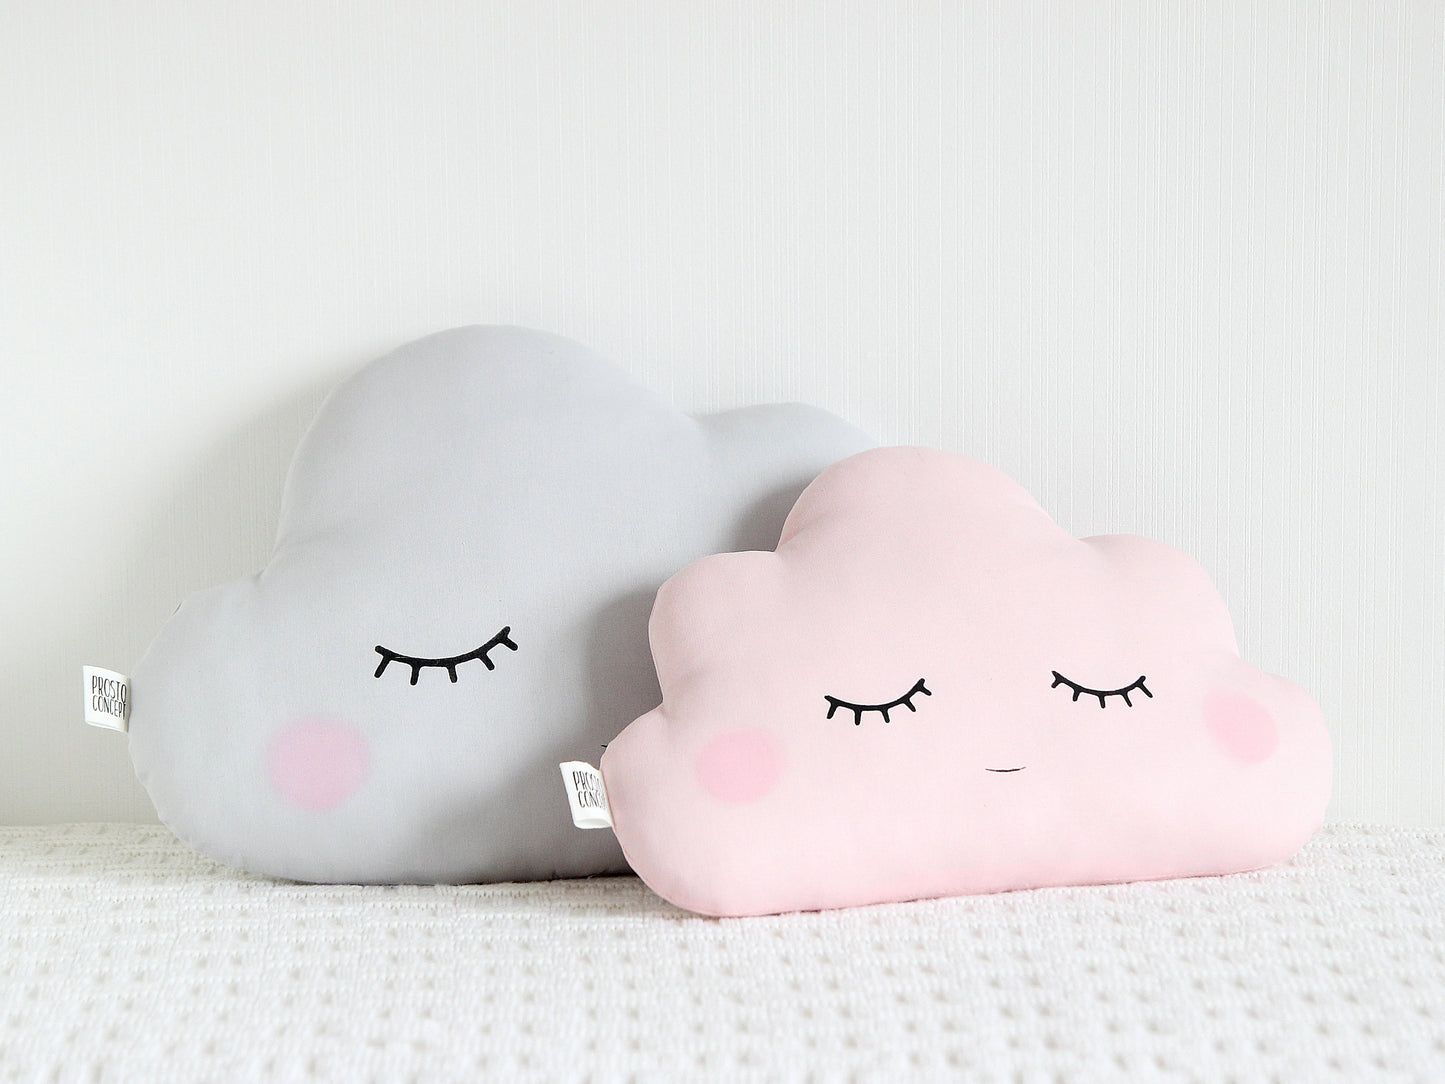 Set of 2 Pillows - Large Cloud Pillow and Small Cloud Pillow (8 colors)